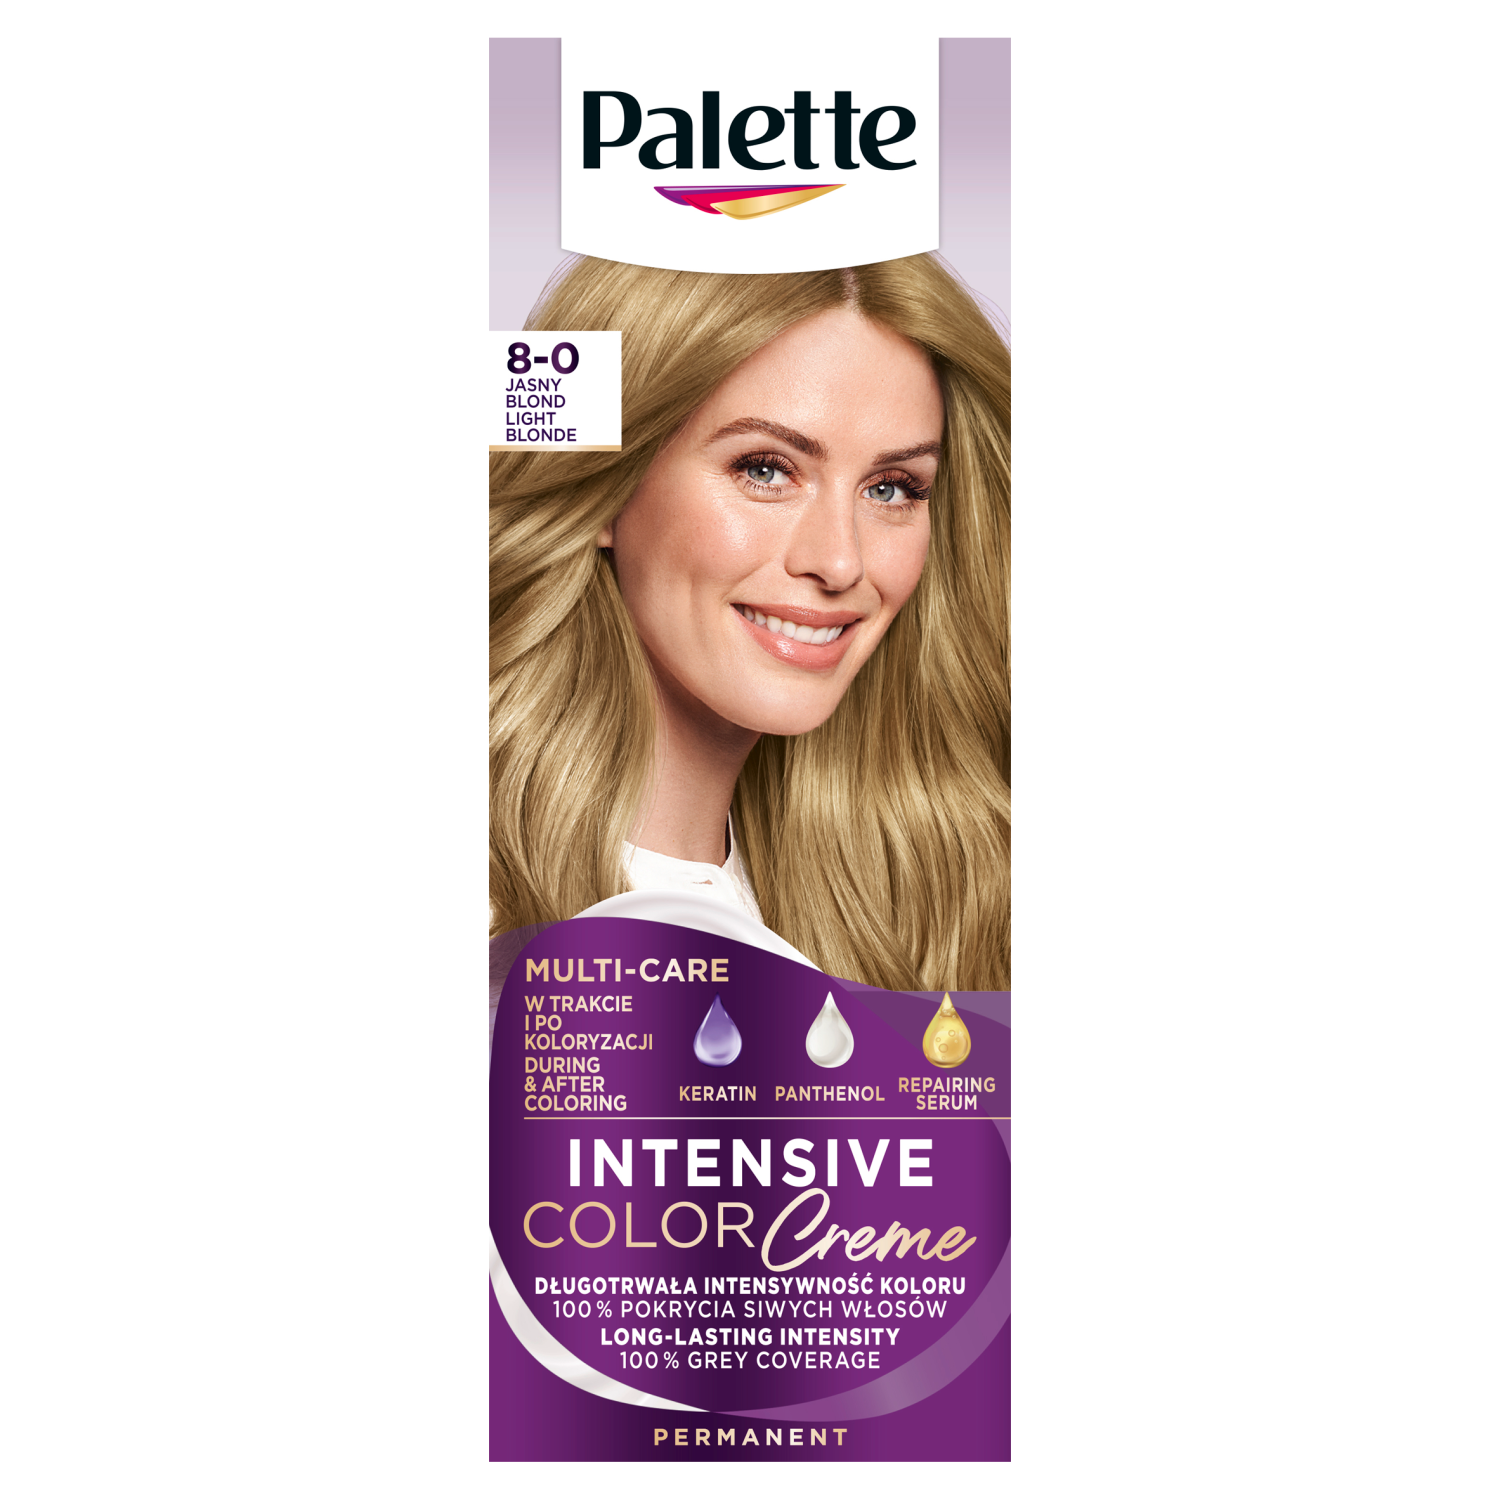 Palette Intensive Color Creme farba do włosów w kremie N7 jasny blond, 1  opak. | hebe.pl